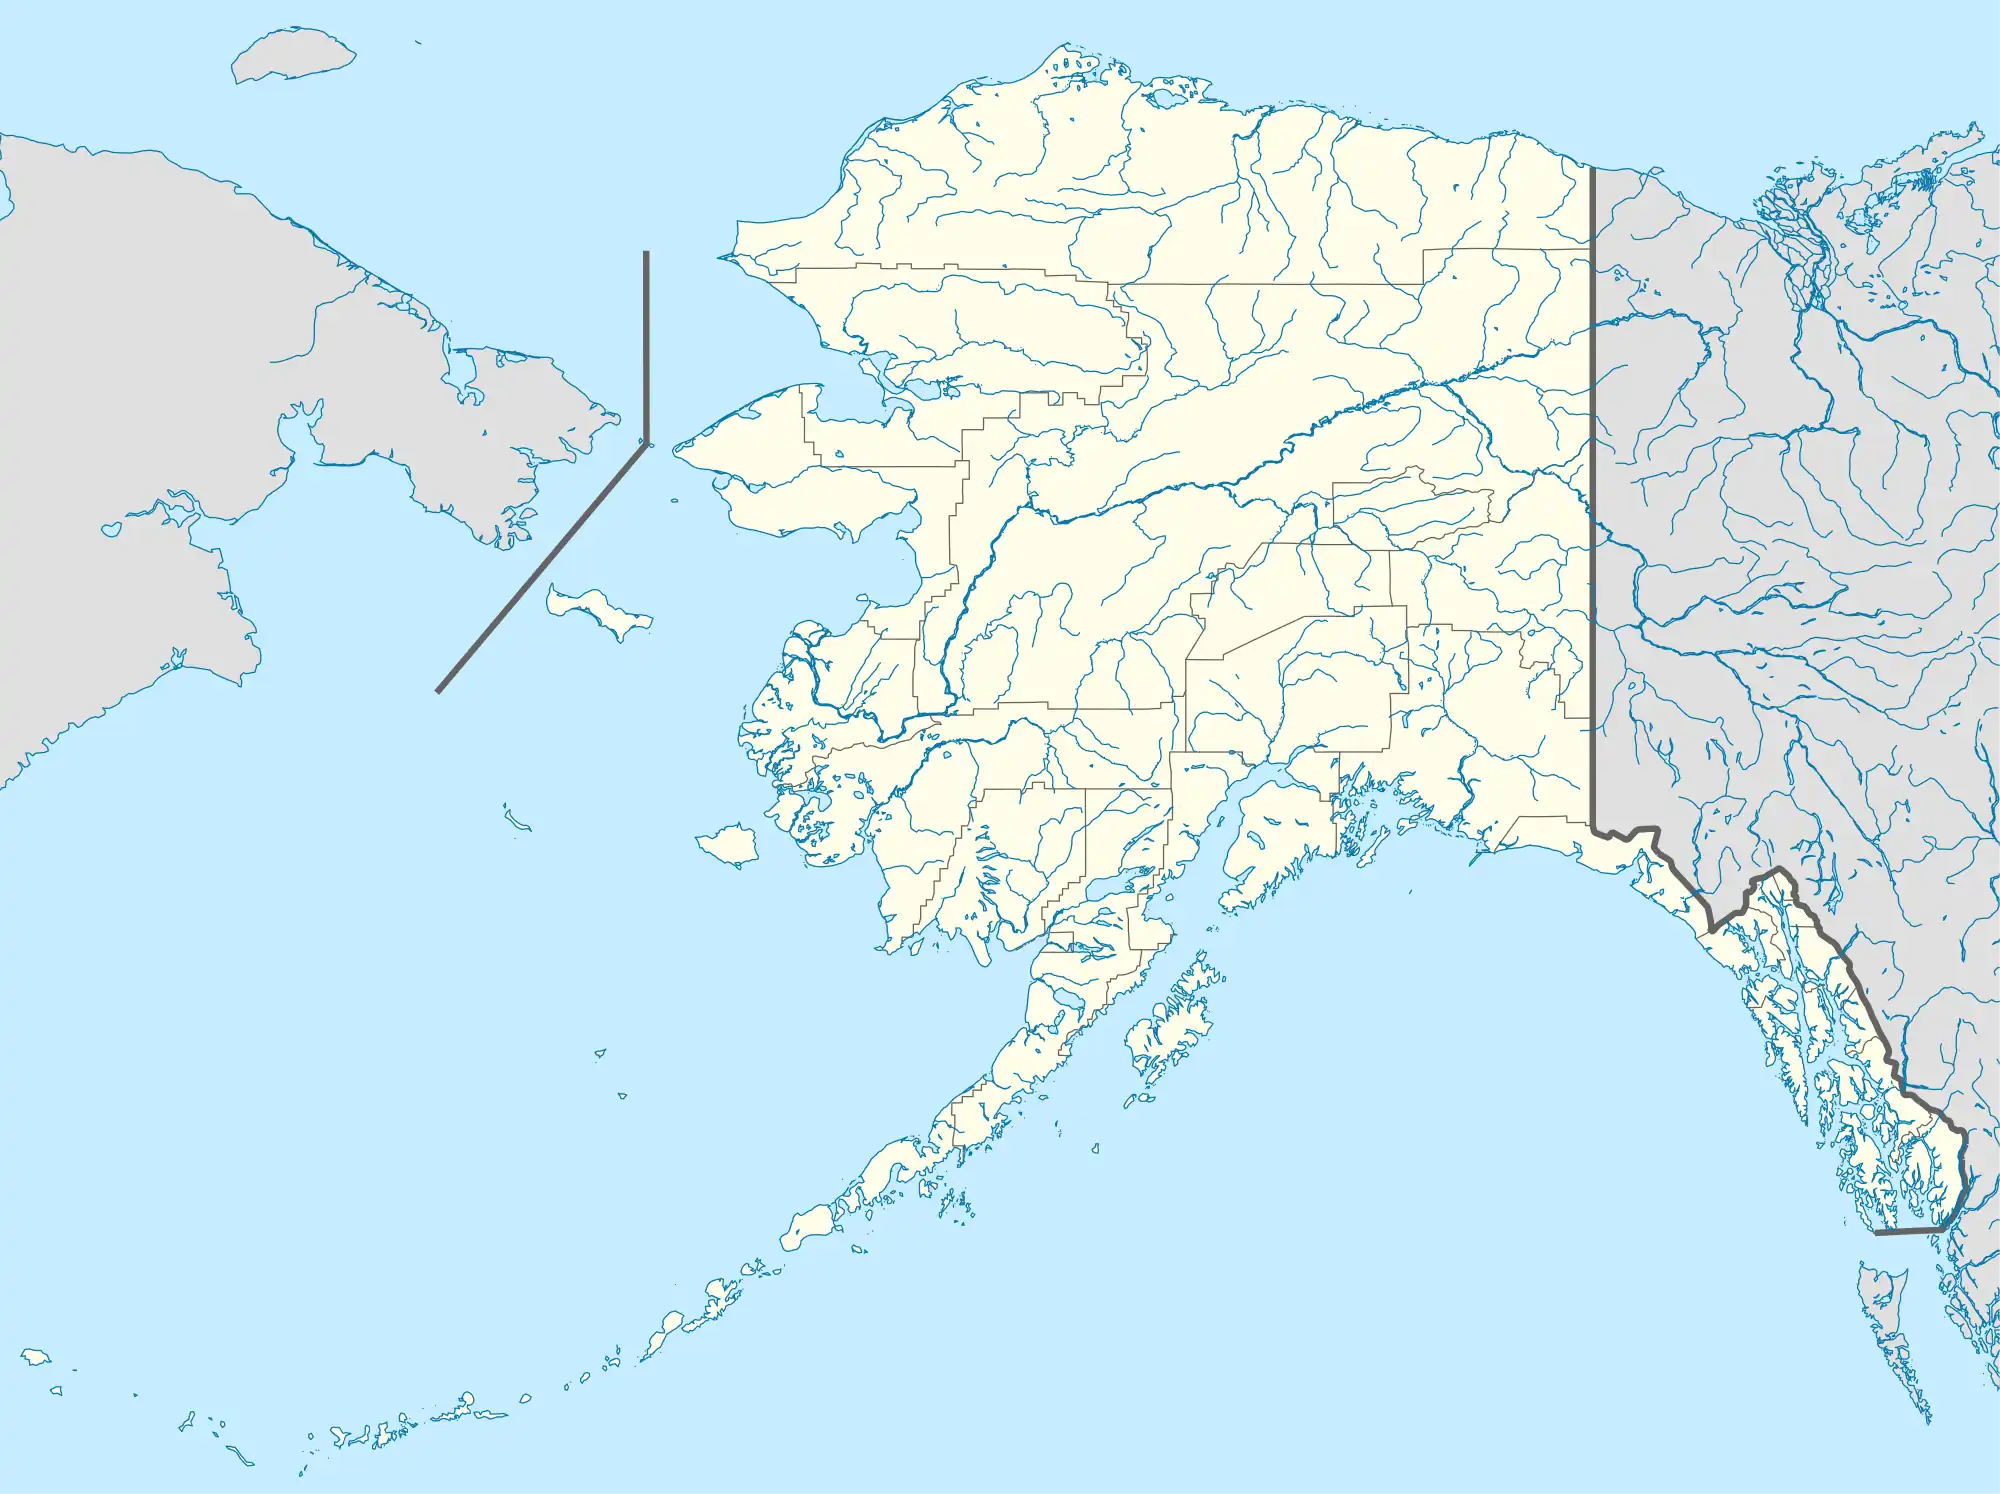 Hagemeister Island is located in Alaska